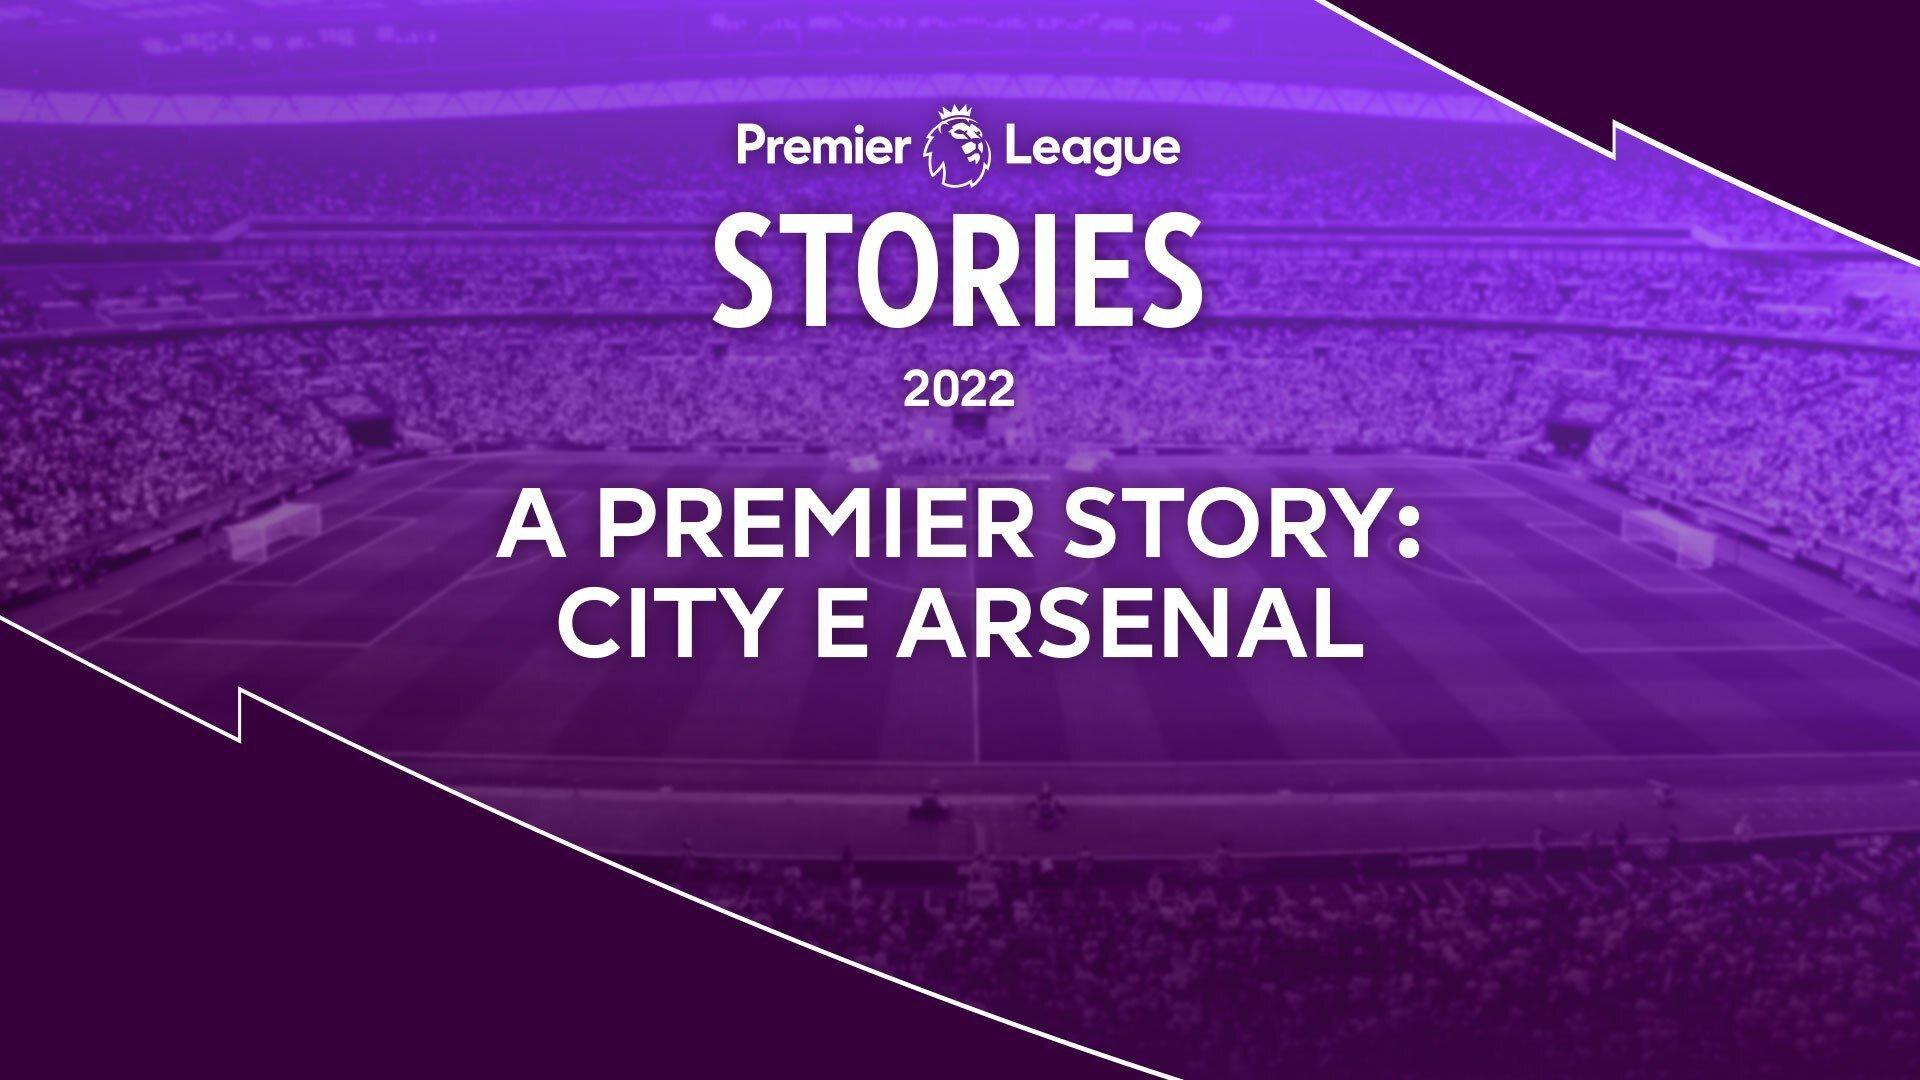 A Premier Story: City e Arsenal